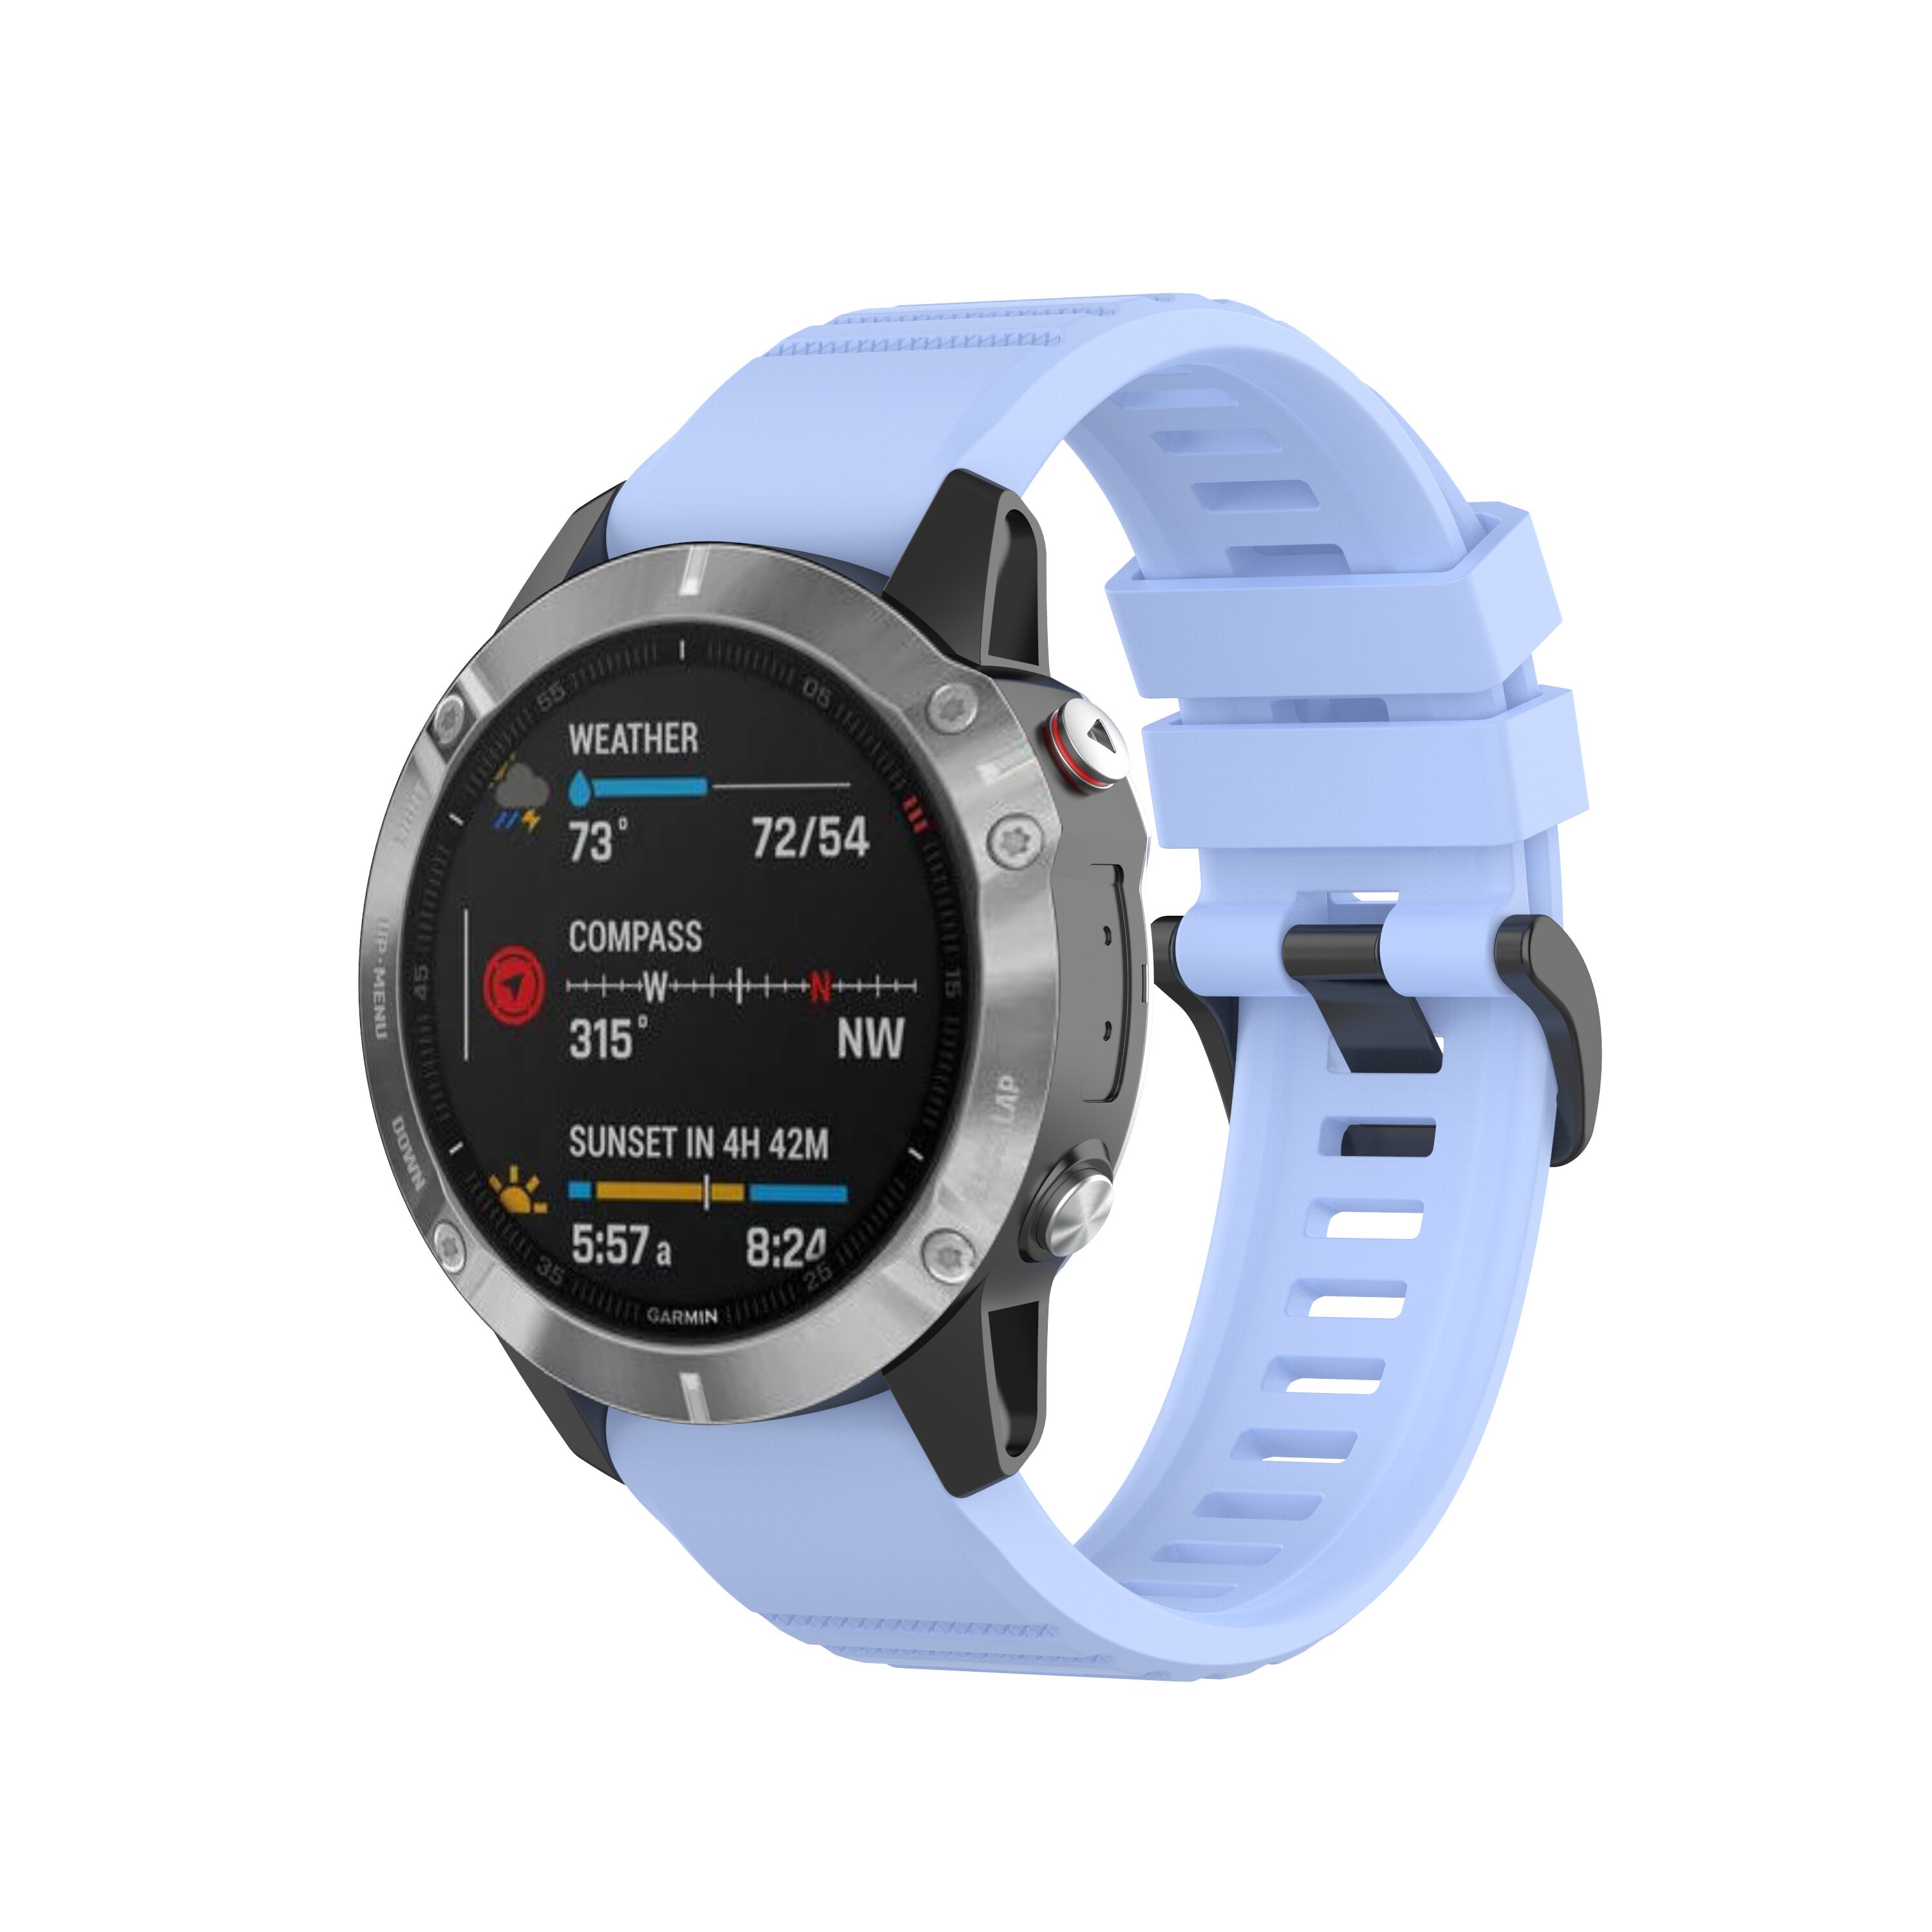 Universal 22MM Silicone Watch Band for Garmin Fenix 6 Fenix 5 Smart Watch